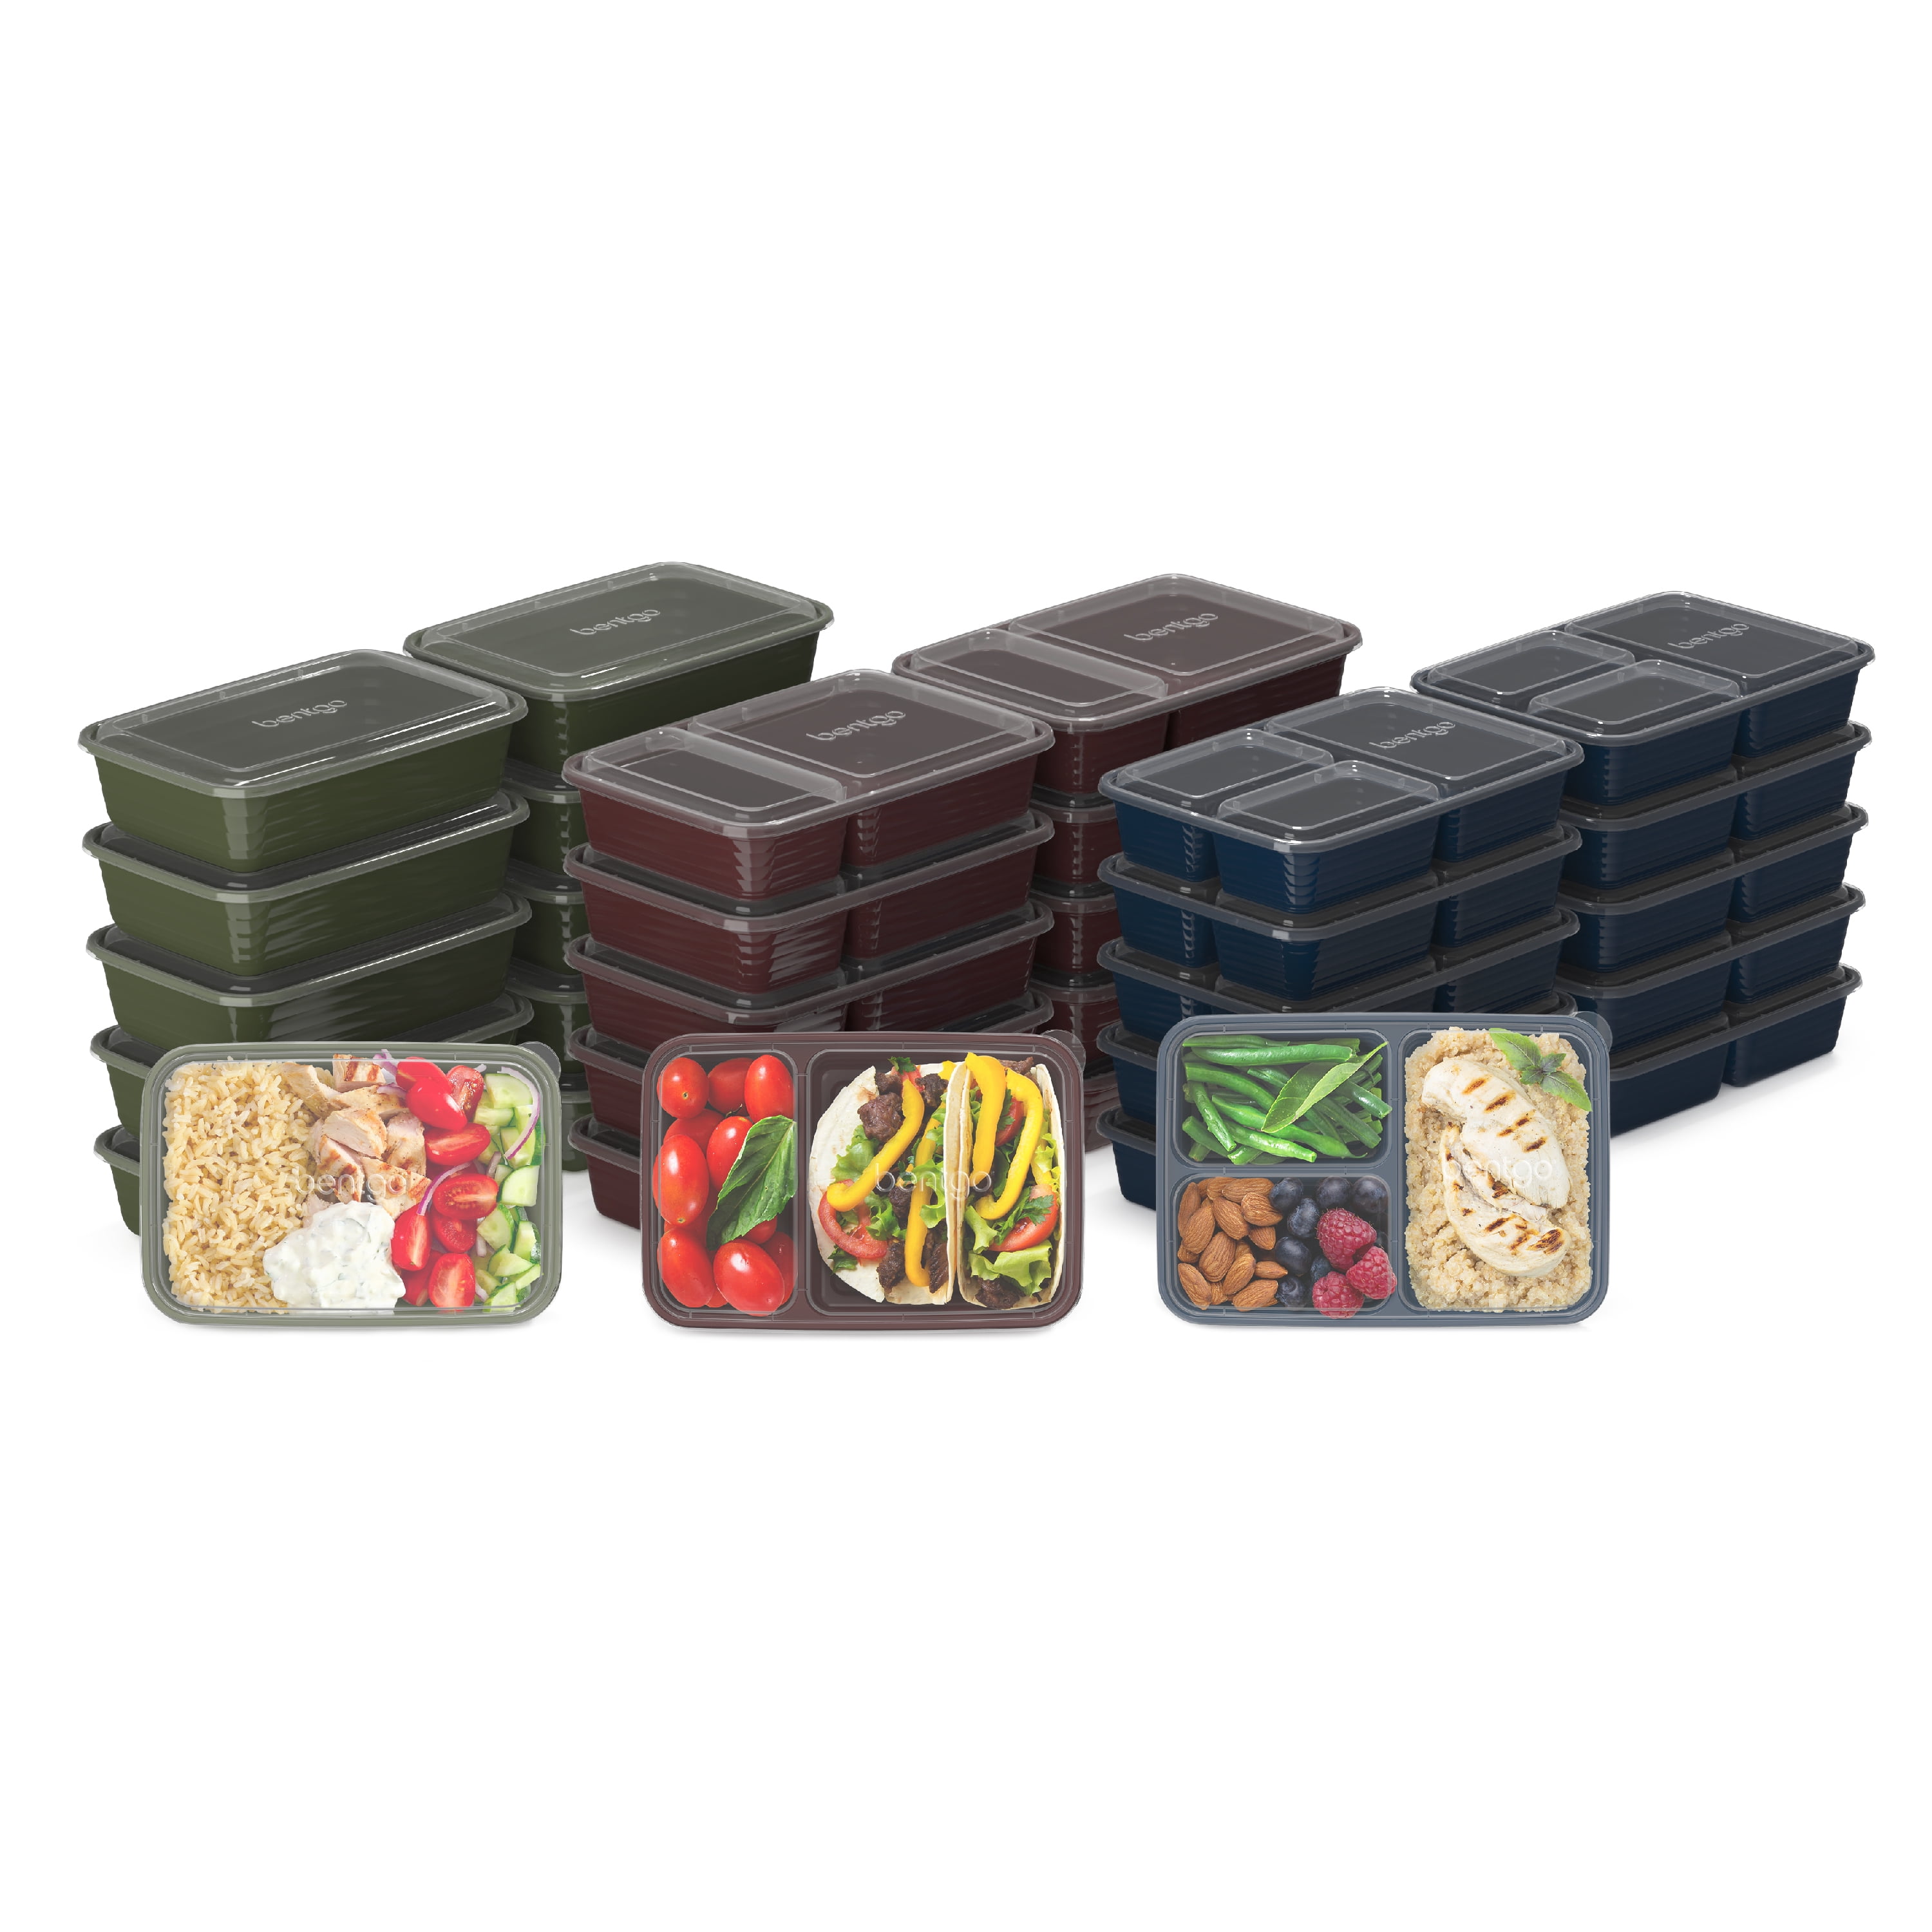 Bentgo Prep 2-Compartment Snack Food Container 20 • Price »